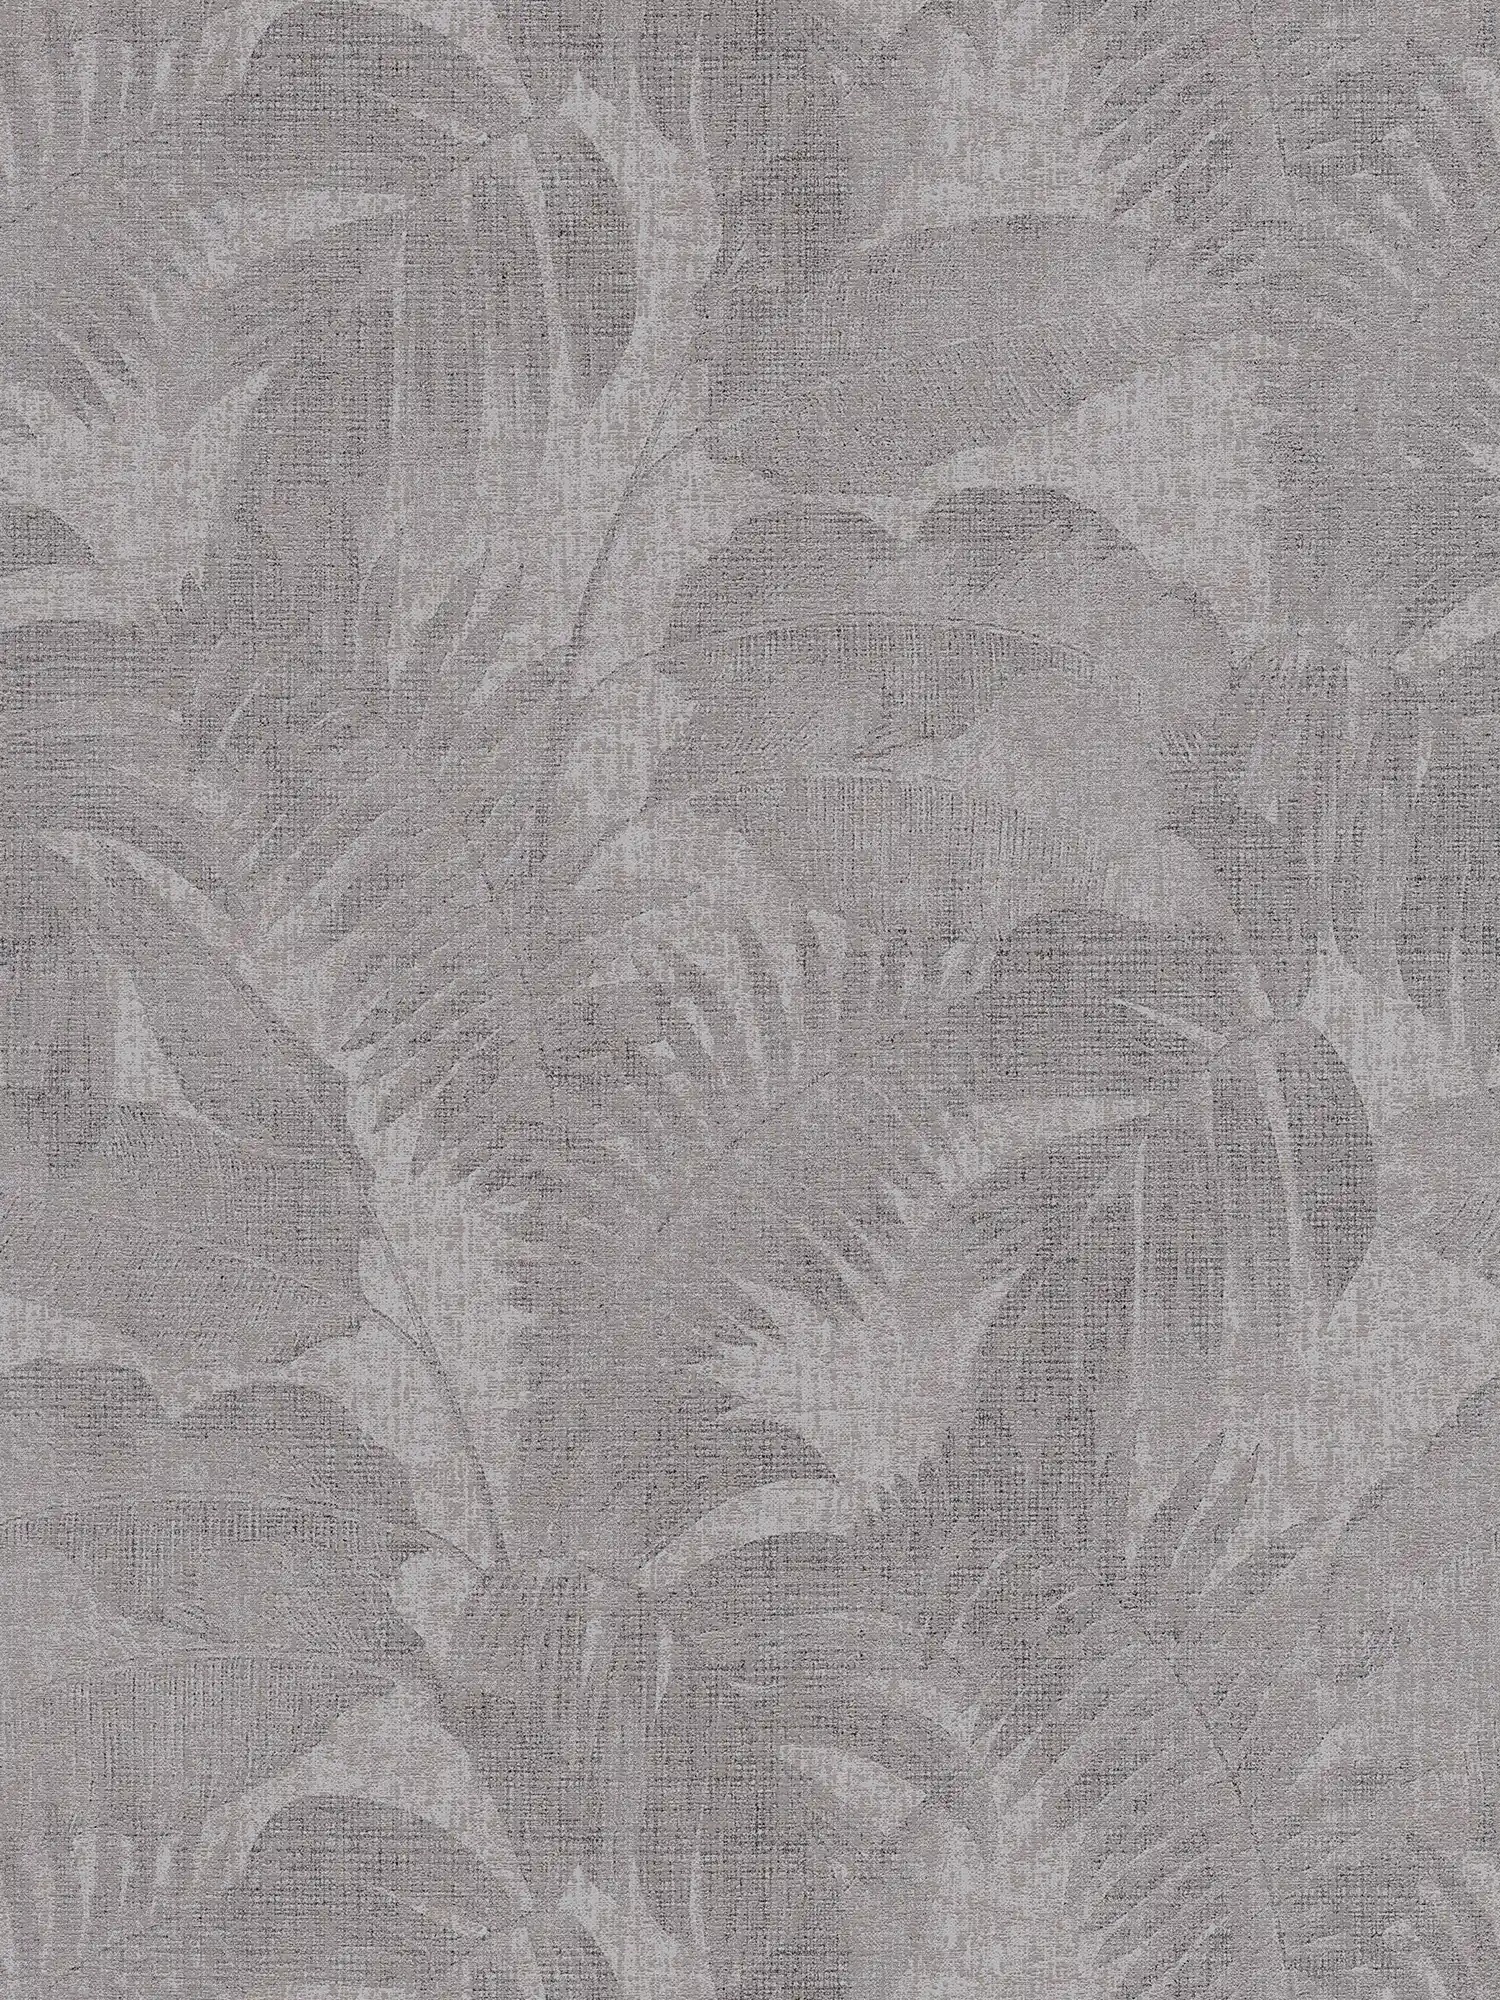 Papel pintado Boho jungle con aspecto de lino - marrón, gris, beige
